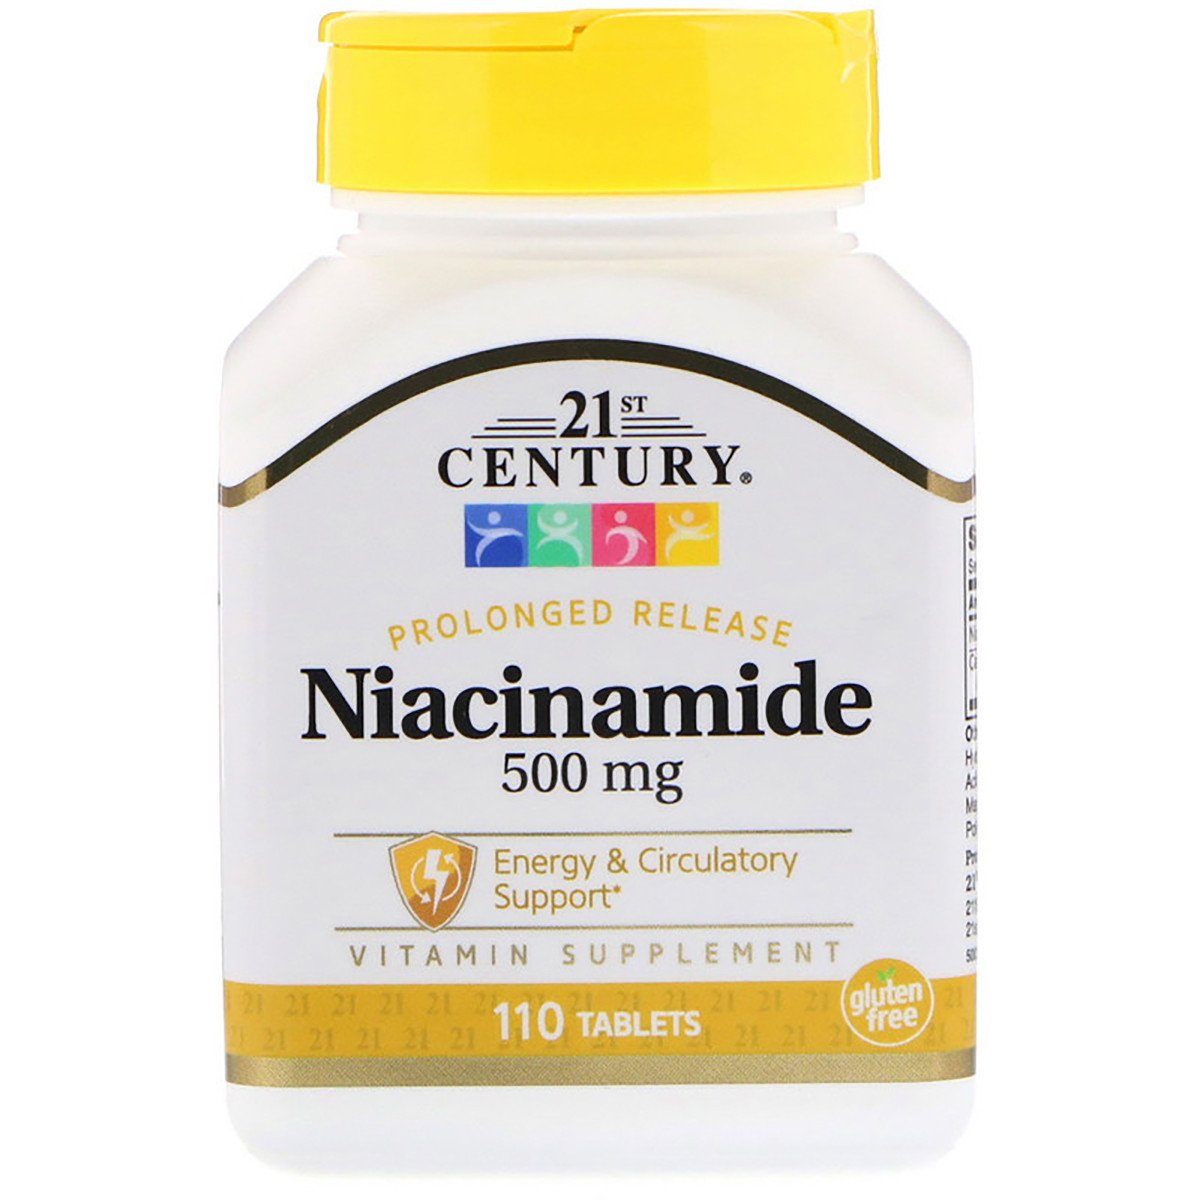 Ниацинамид, 500 мг, 21st Century, 110 таблеток,  мл, 21st Century. Витамин B. Поддержание здоровья 